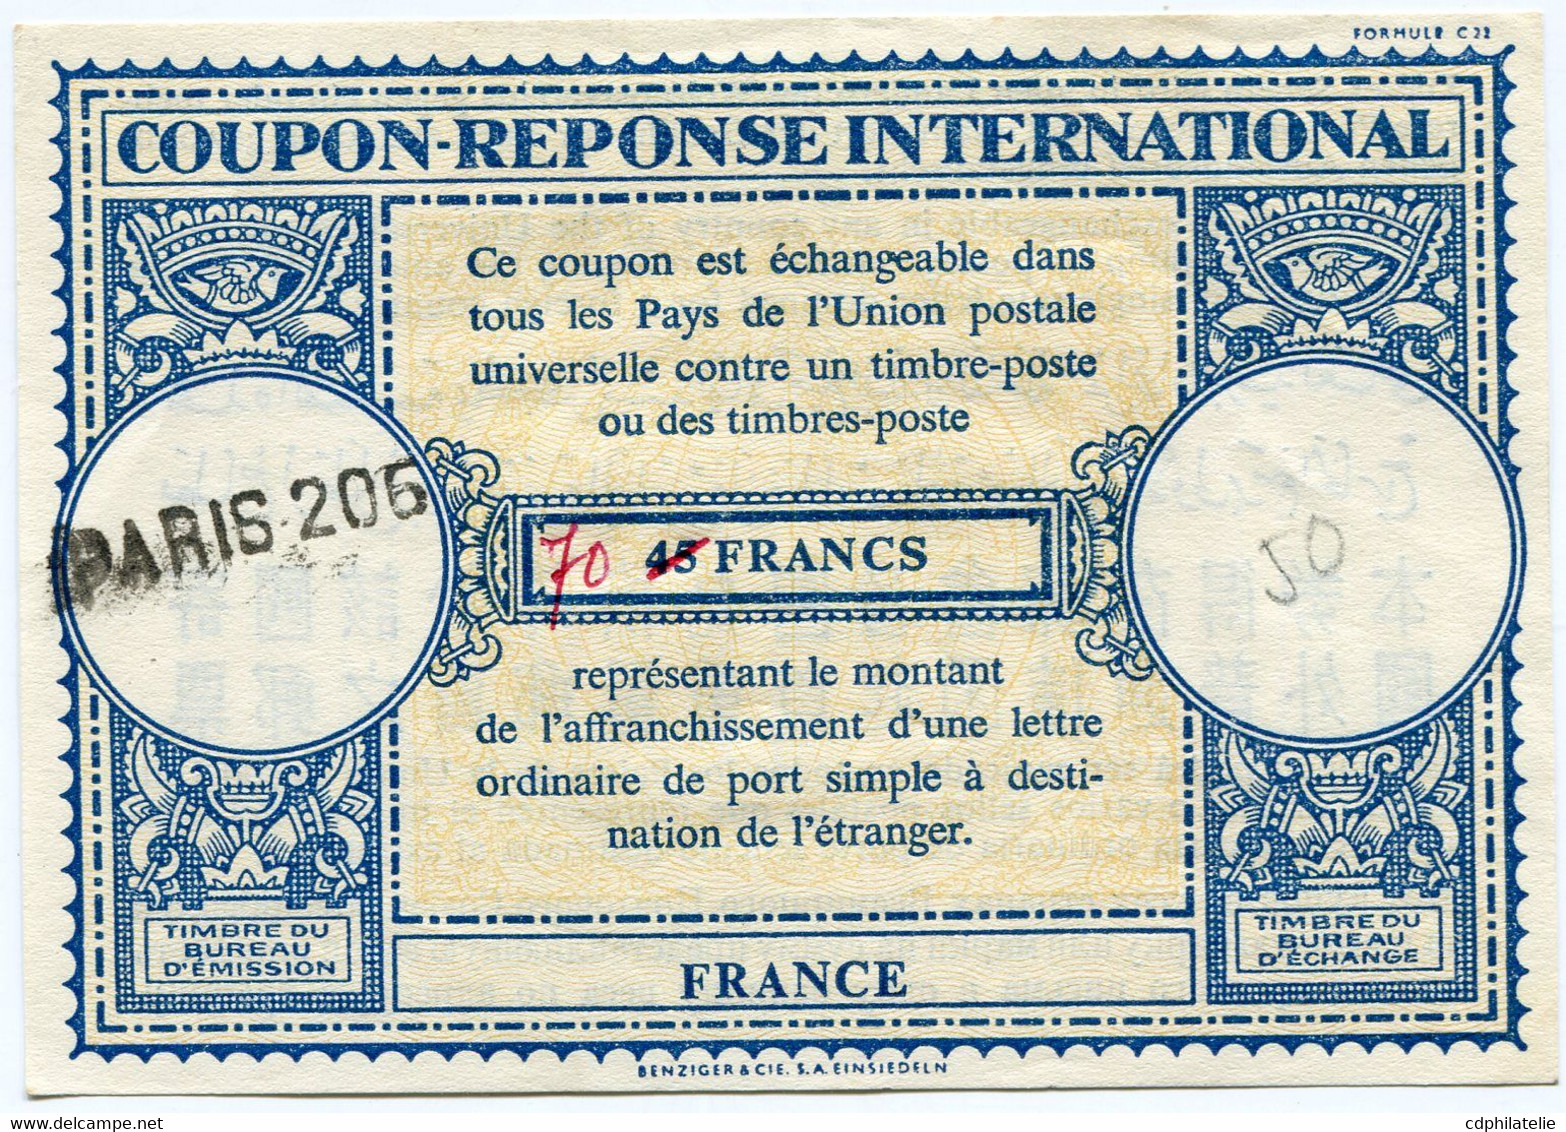 FRANCE COUPON-REPONSE INTERNATIONAL DE 45 FRANCS AVEC MODIFICATION MANUSCRITE DE TARIF 70 FRANCS AVEC OBL PARIS 206 - Reply Coupons